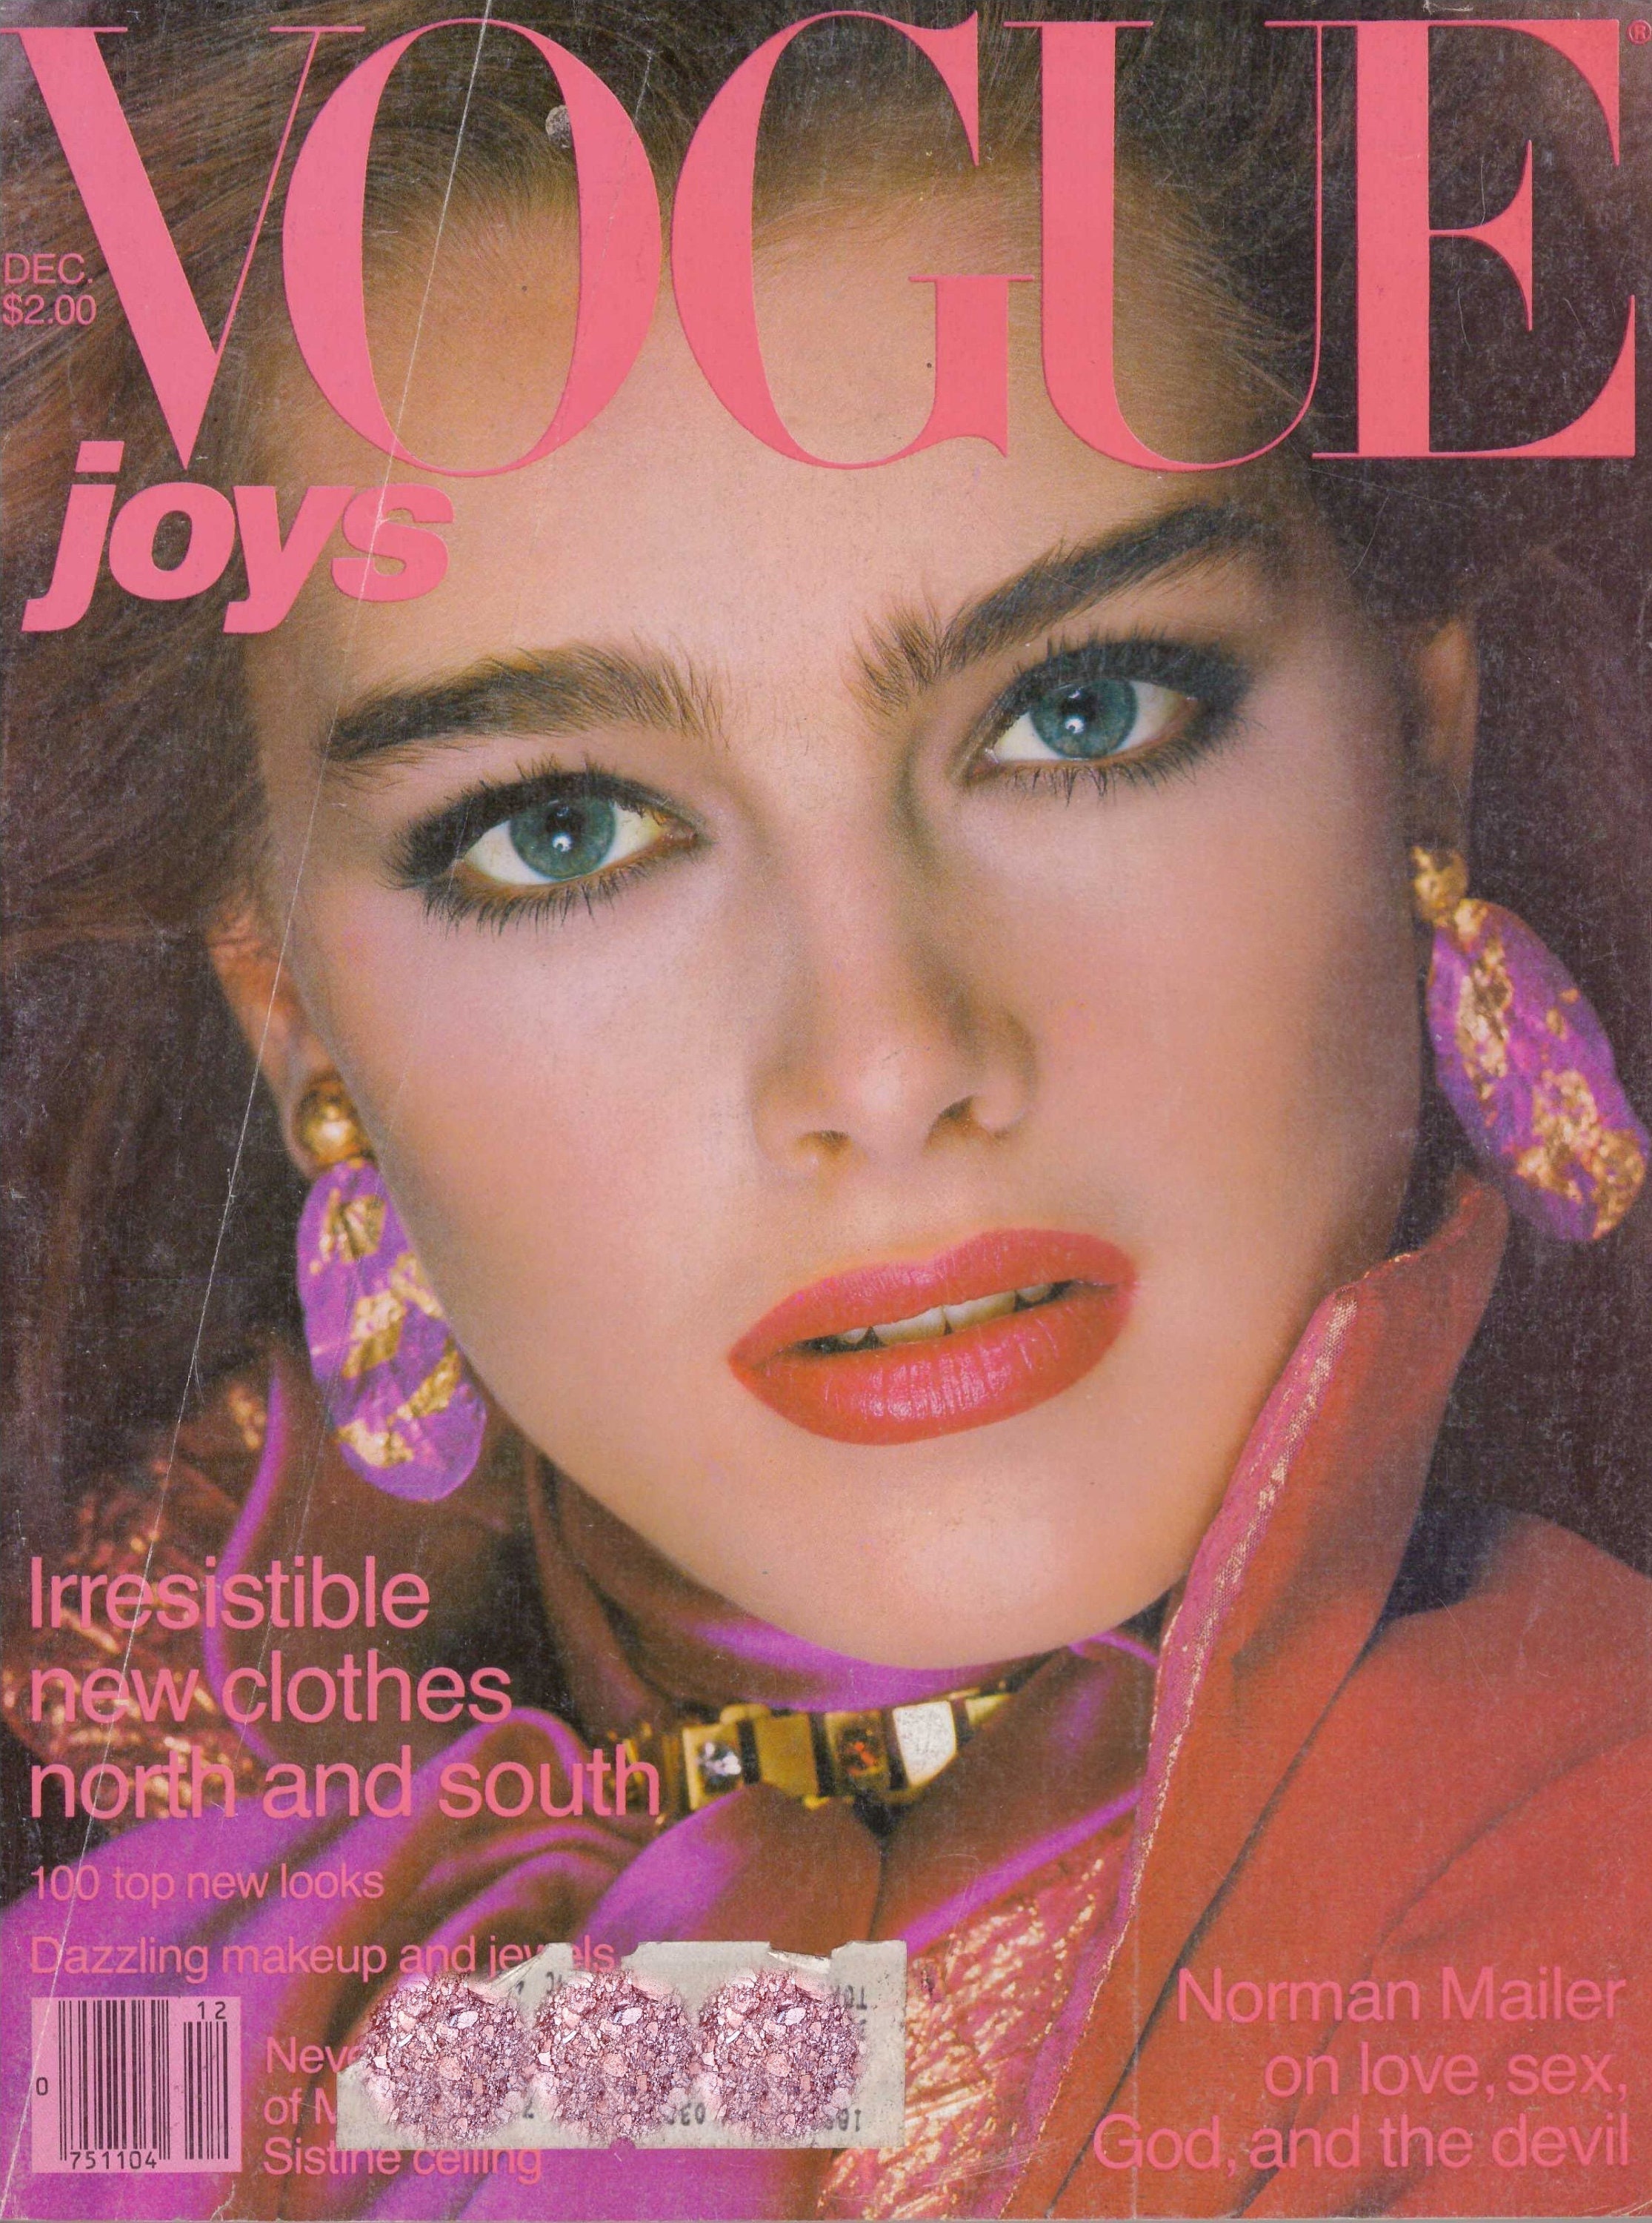 Брук шилдс на обложке. Брук Шилдс для Вог 80. Брук Шилдс Vogue 1980. Брук Шилдс Vogue. Брук Шилдс 80.